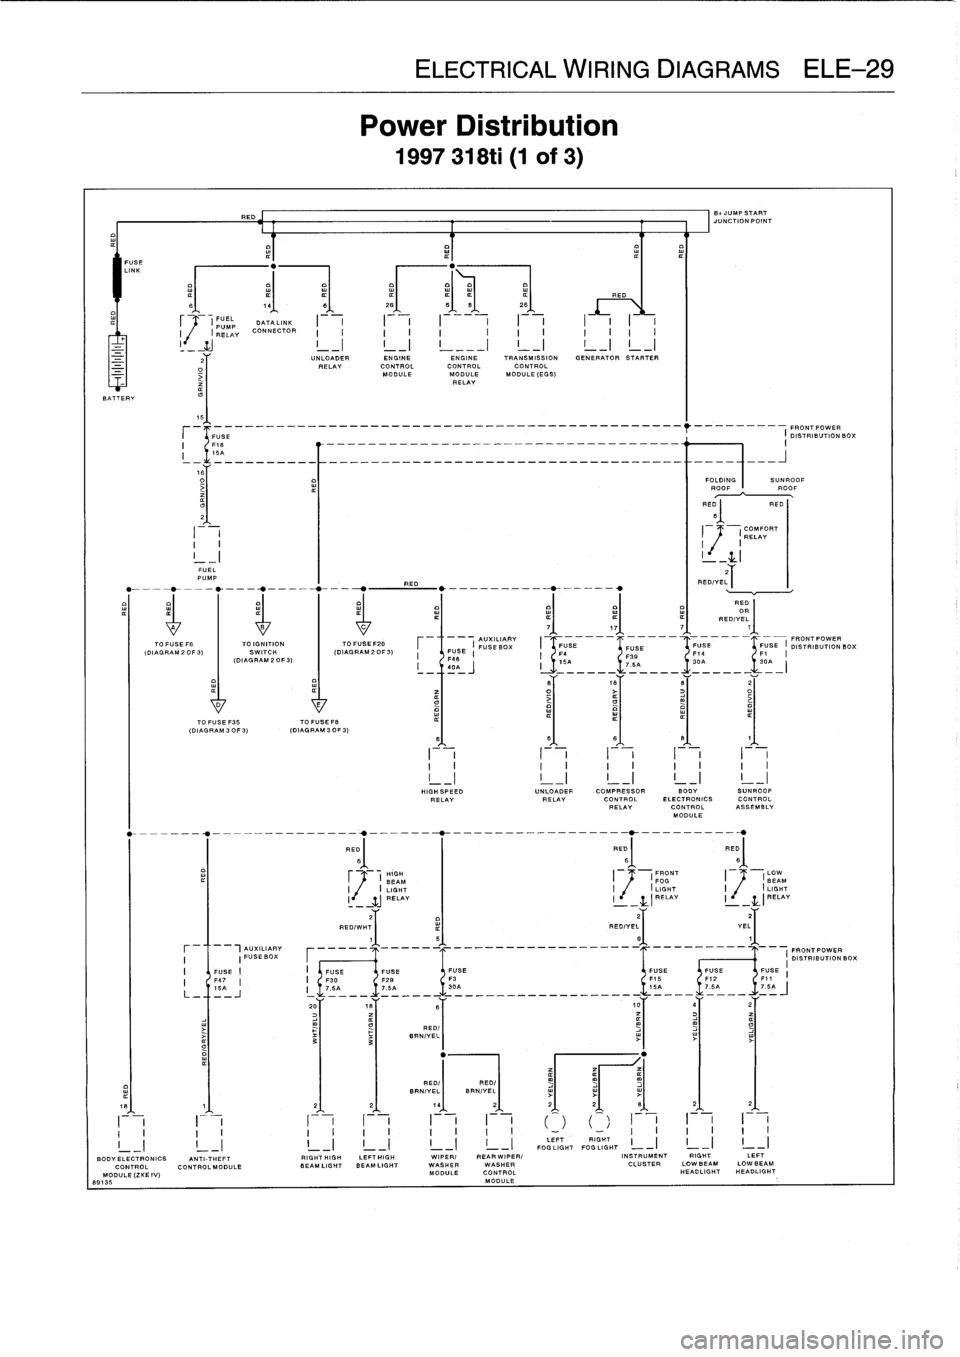 BMW 323i 1995 E36 Service Manual 
FUSE
LINK

I
IRELAY
CONNECTOR
O
-
z
BATTERY

TO
FUSE
F6
(DIAGRAM
2
OF
3)

FUEL
PUMP

I
-
1
I
--
,I

	

I

	

I

	

I
_I
LI
BODY
ELECTRONICS

	

ANTI-THEFT
CONTROL
CONTROLMODULEMODULE
(ZKE
IV)
80135

